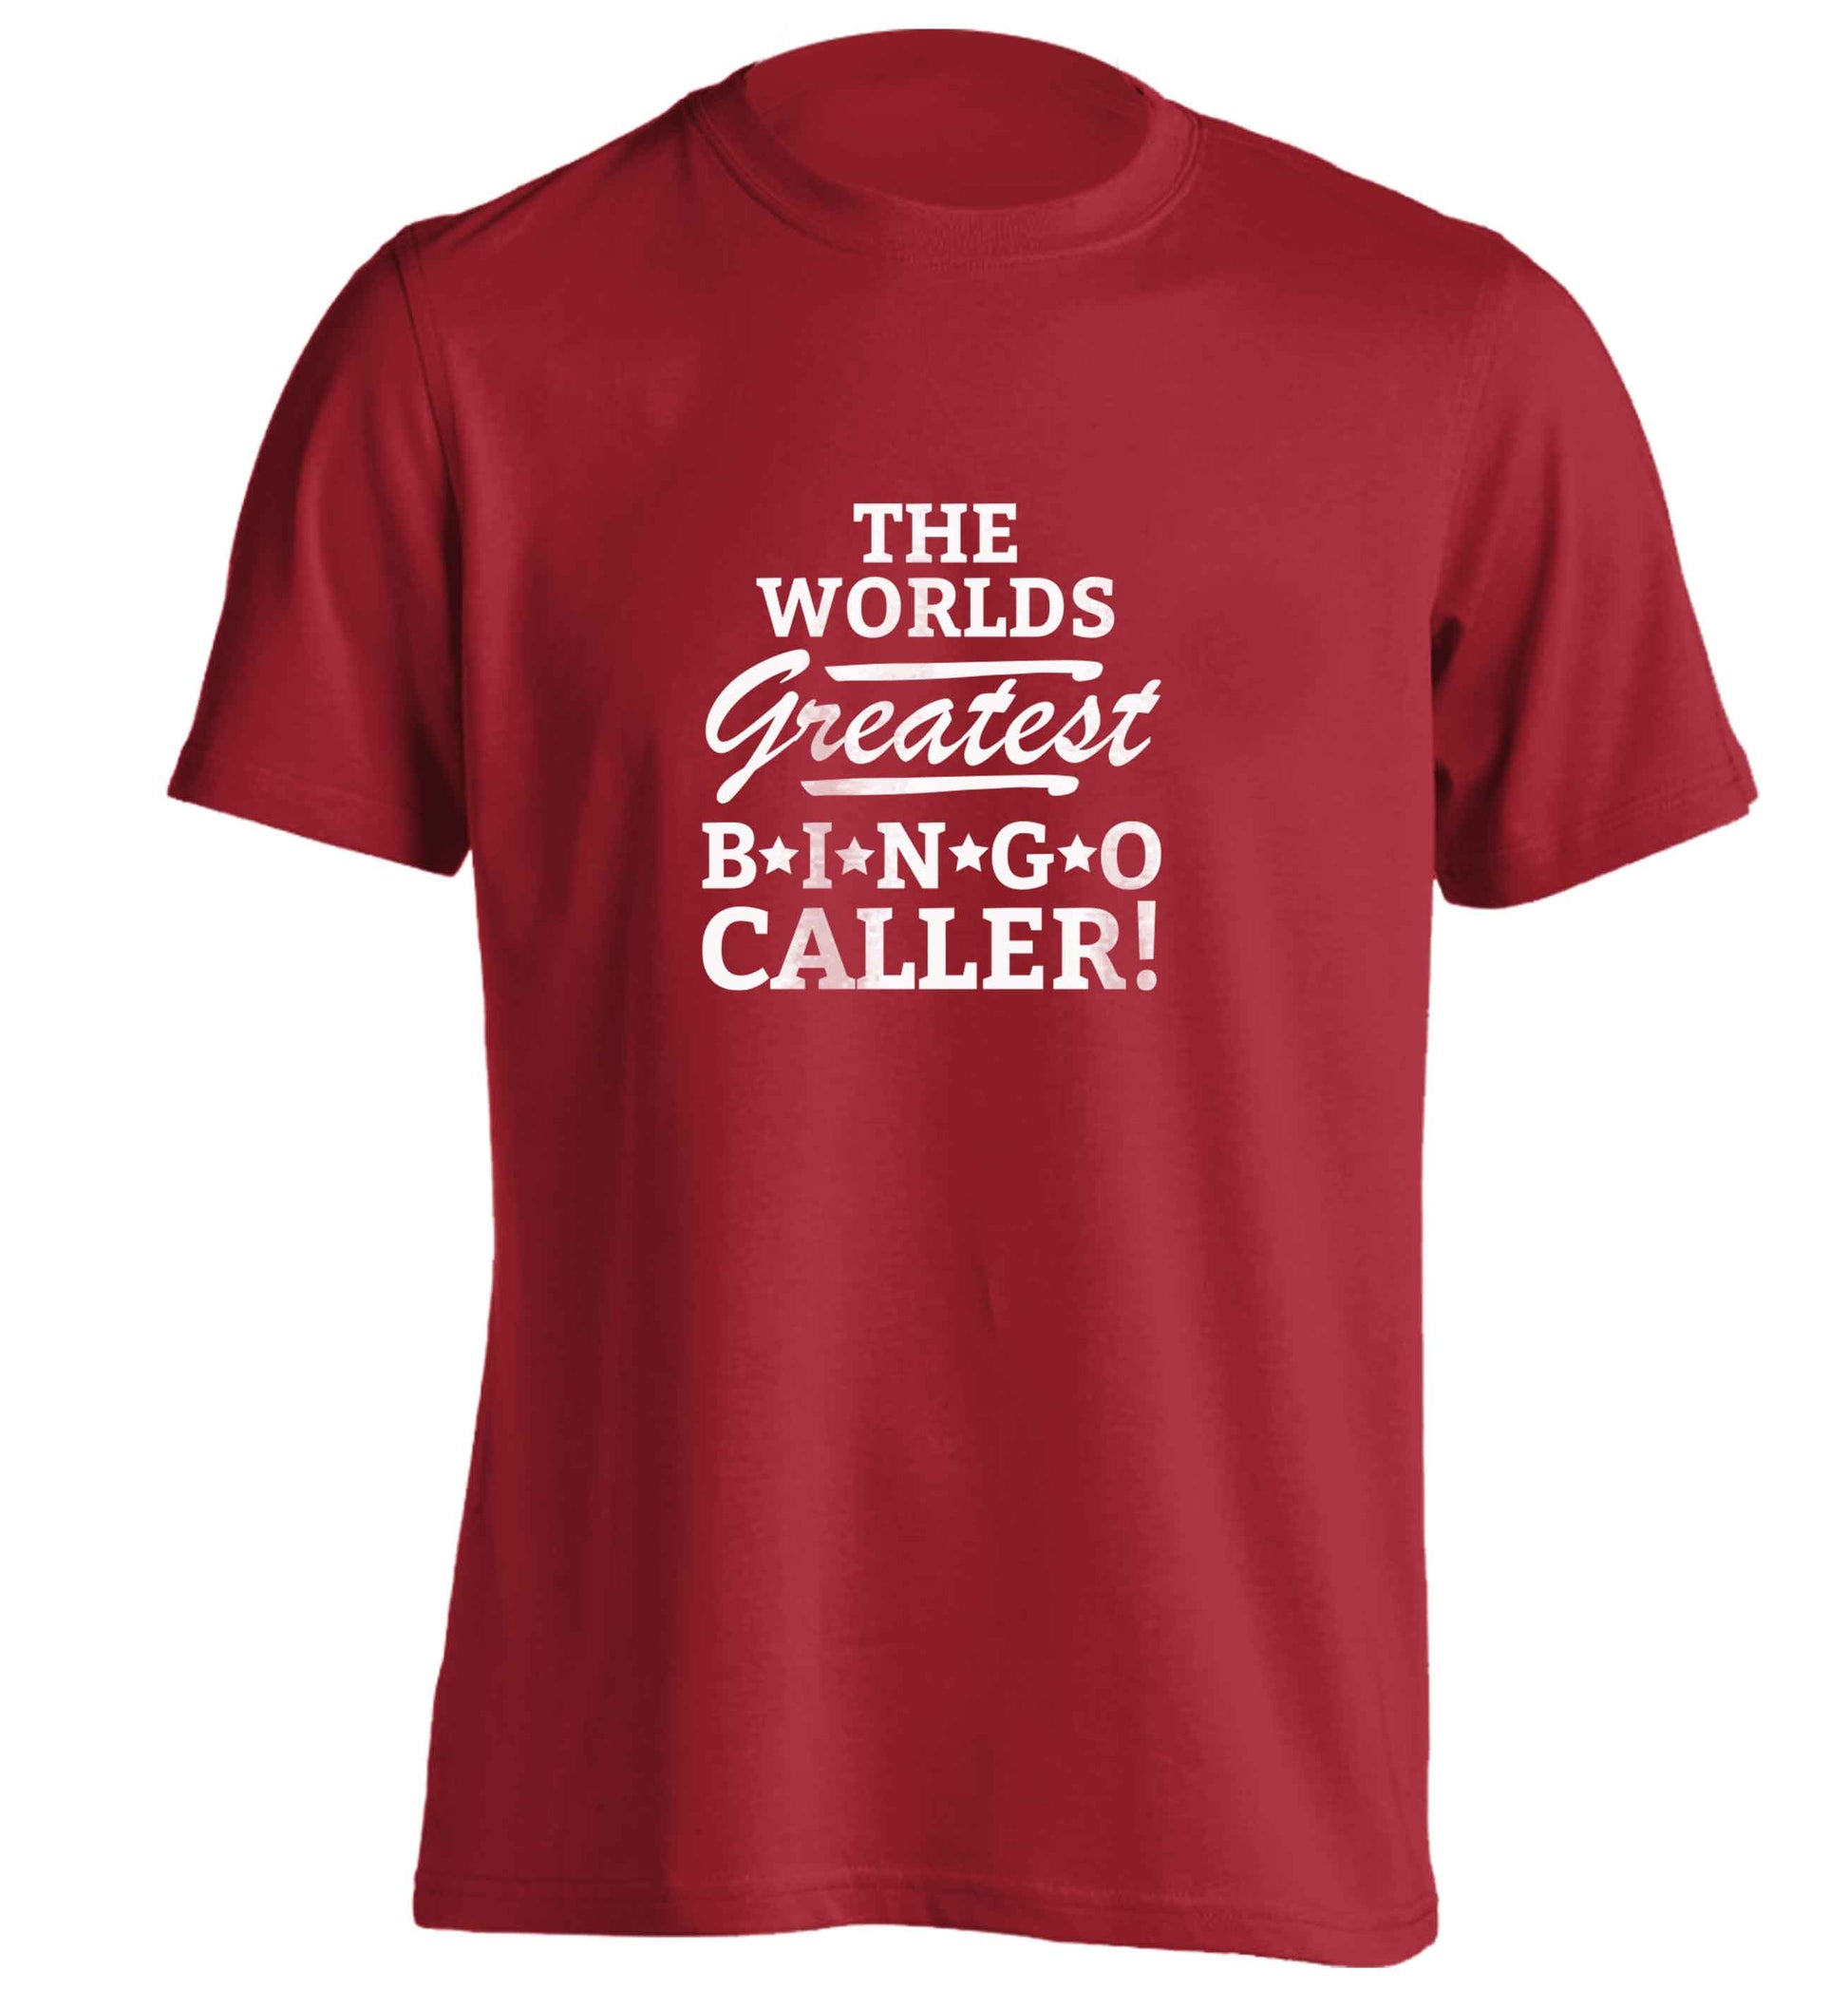 Worlds greatest bingo caller adults unisex red Tshirt 2XL